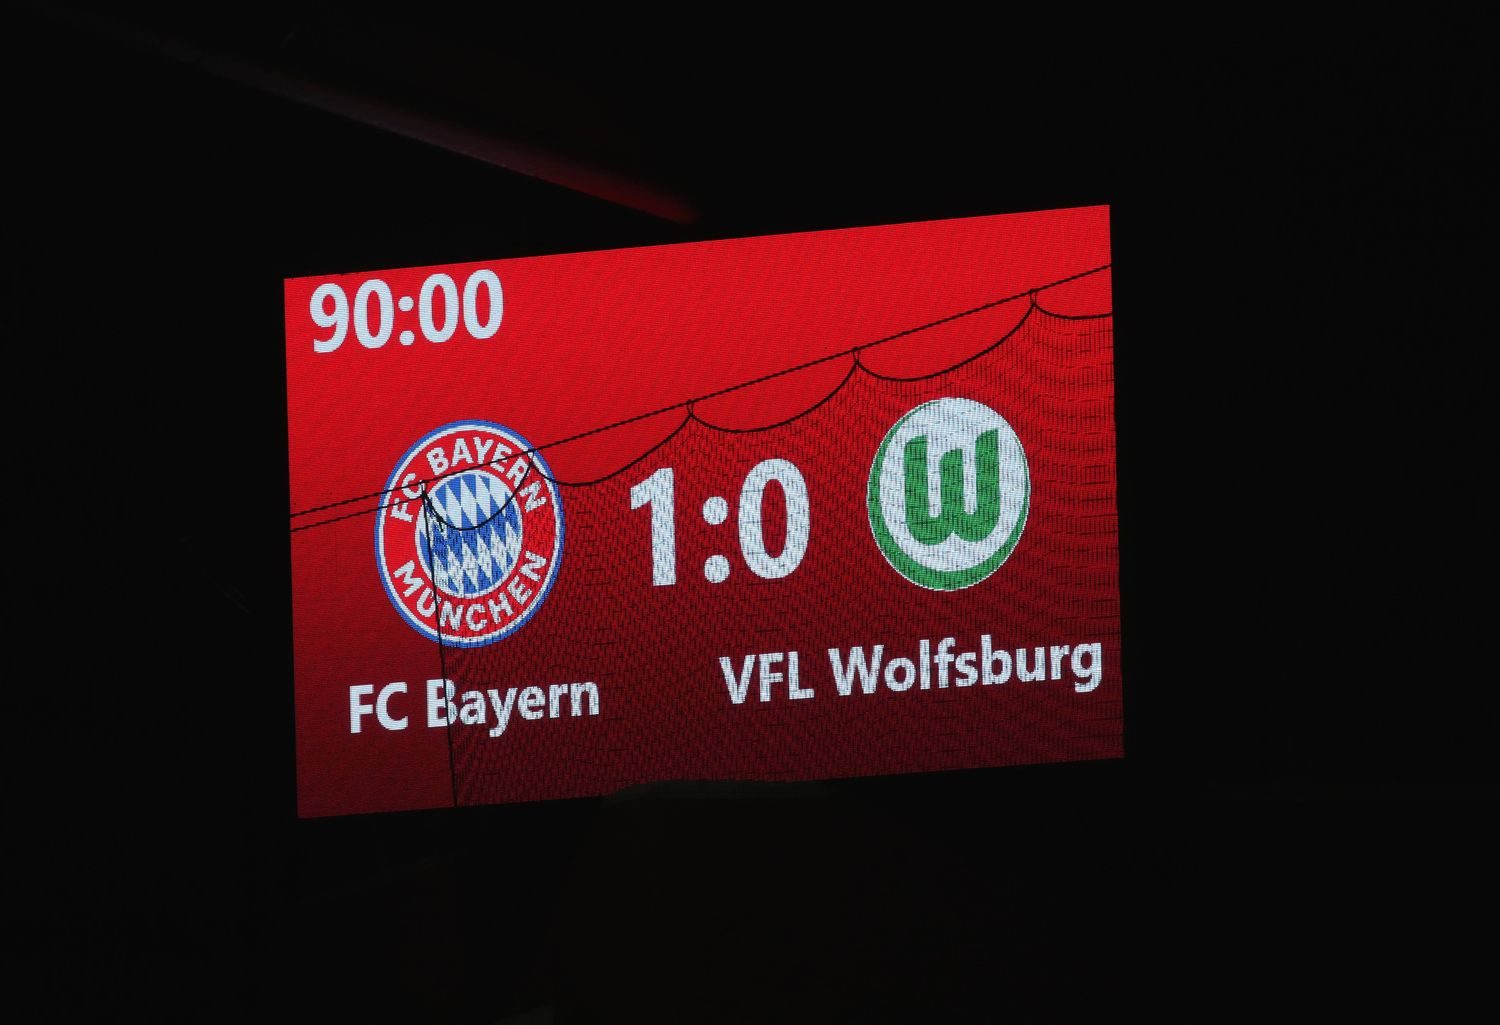 FCB Frauen vs. VfL Wolfsburg